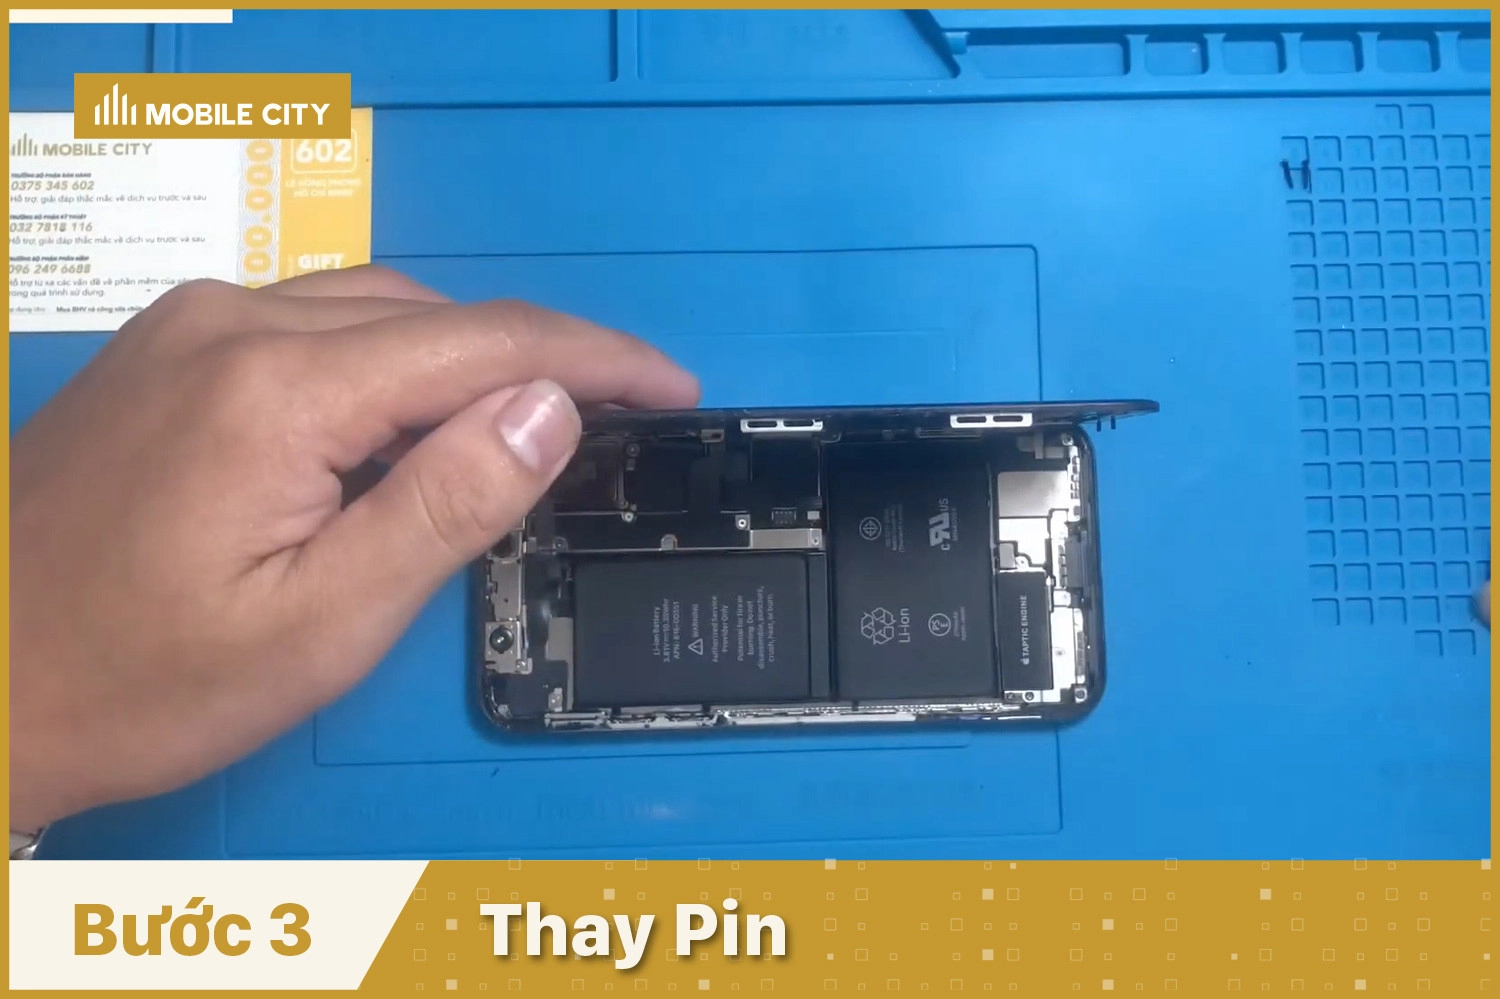 Thay Pin Pisen iPhone X, thay Pin